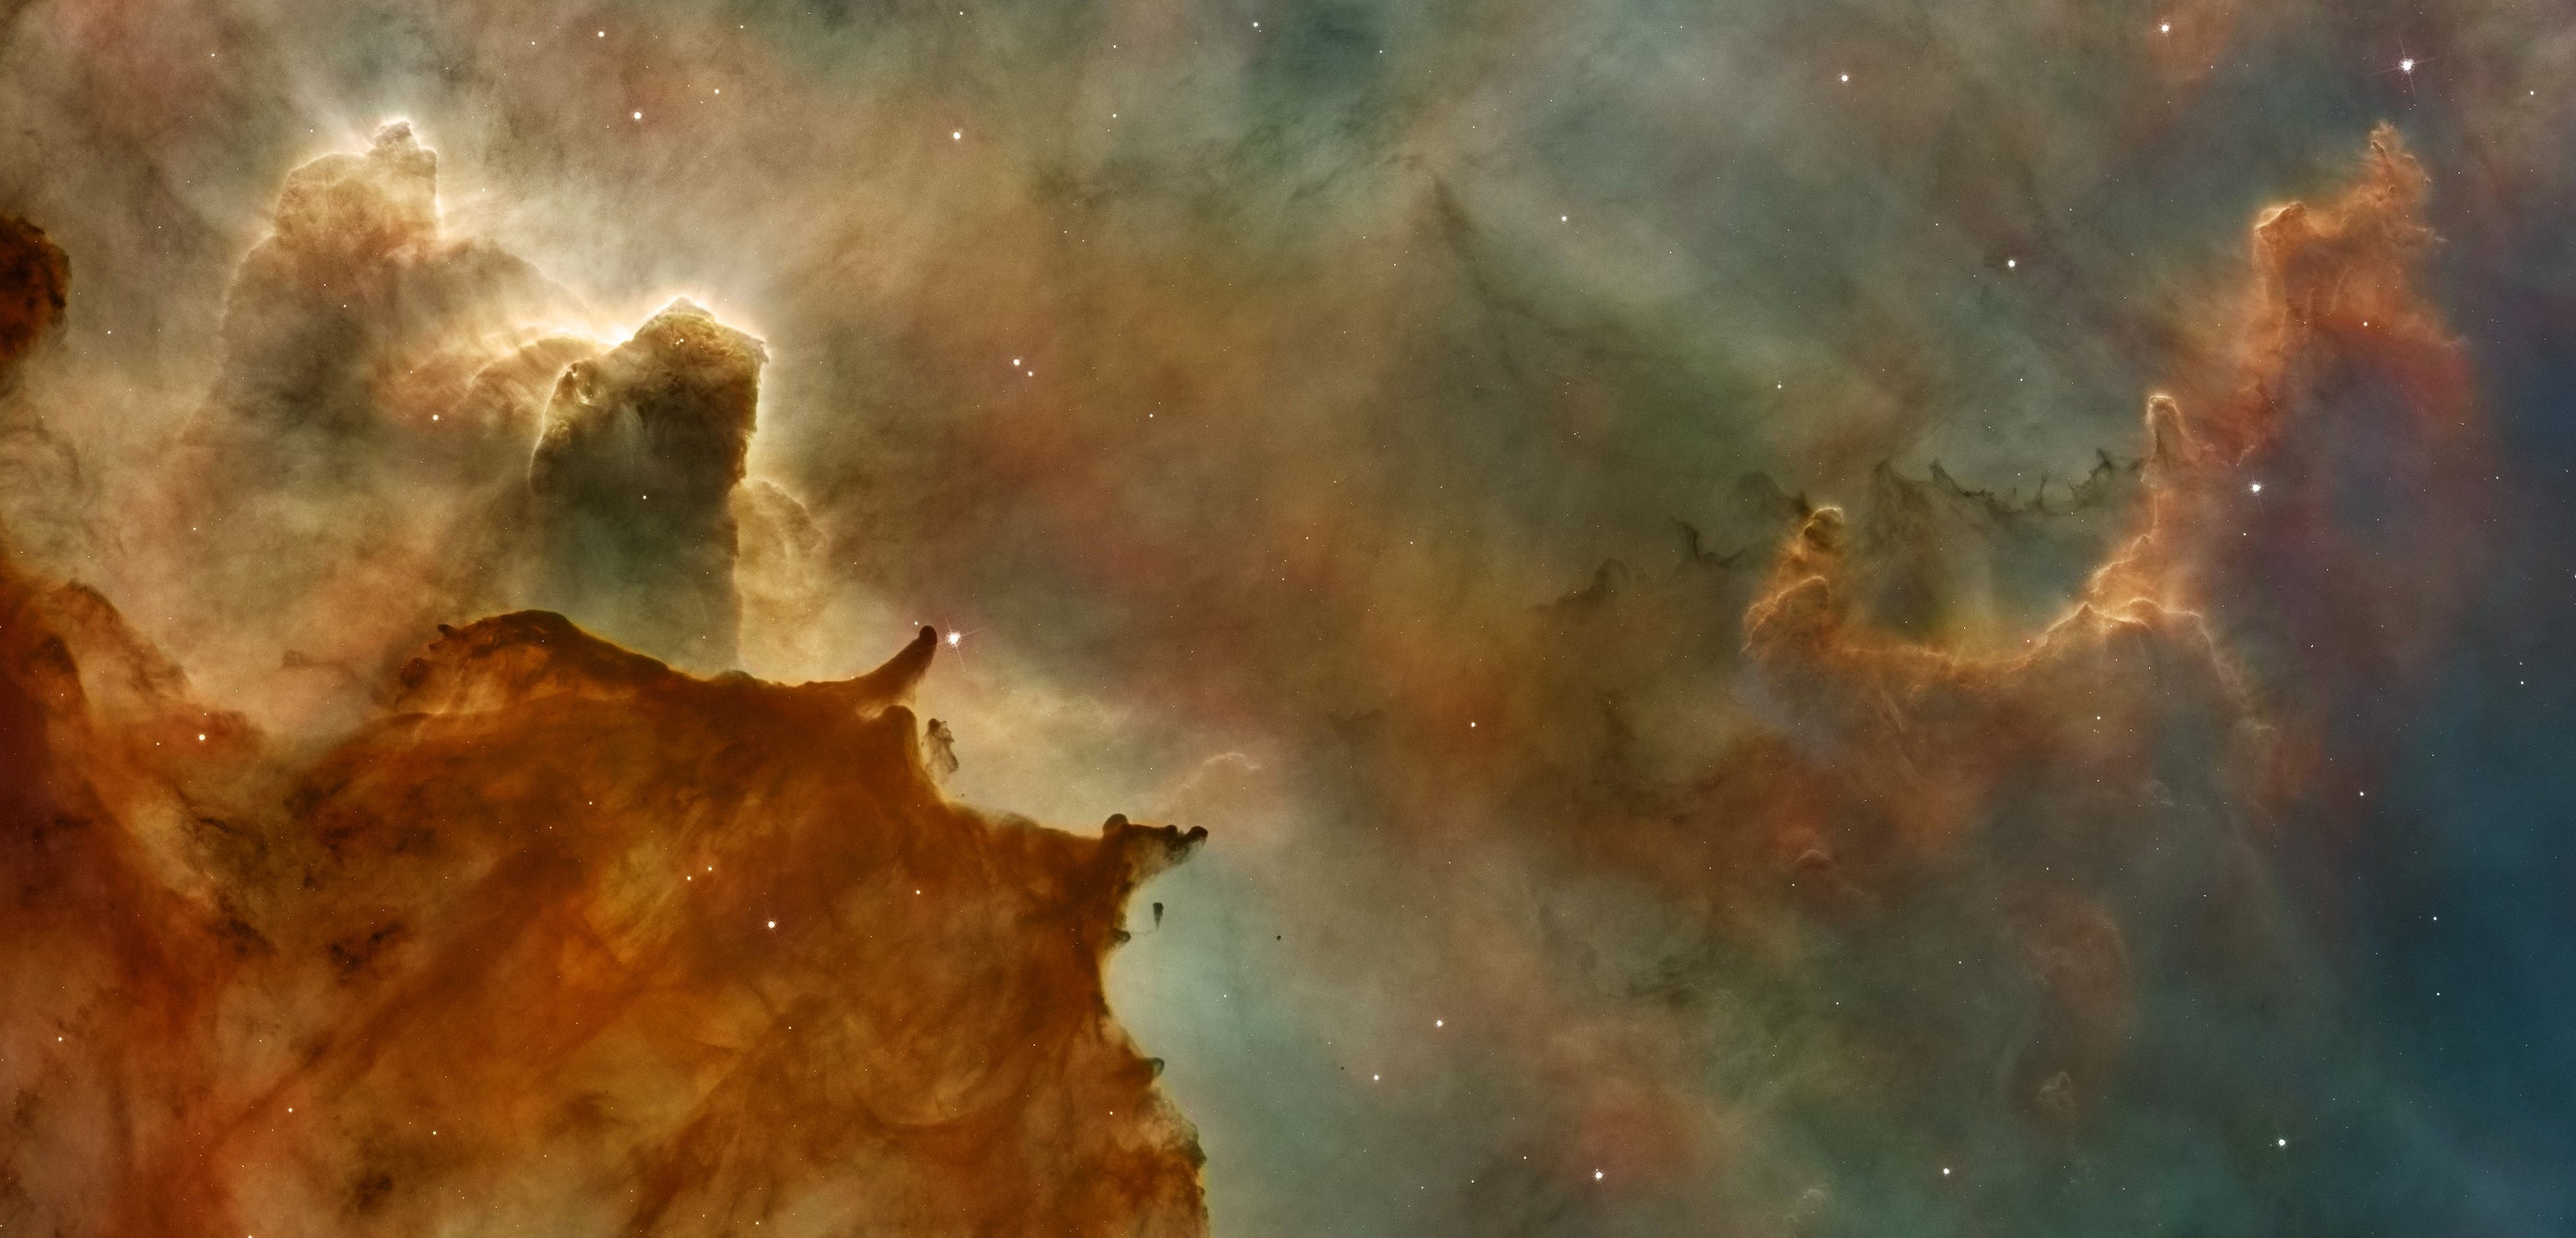 Carina Nebula, HD wallpapers, Backgrounds, Cosmic cliffs, 2800x1350 Dual Screen Desktop